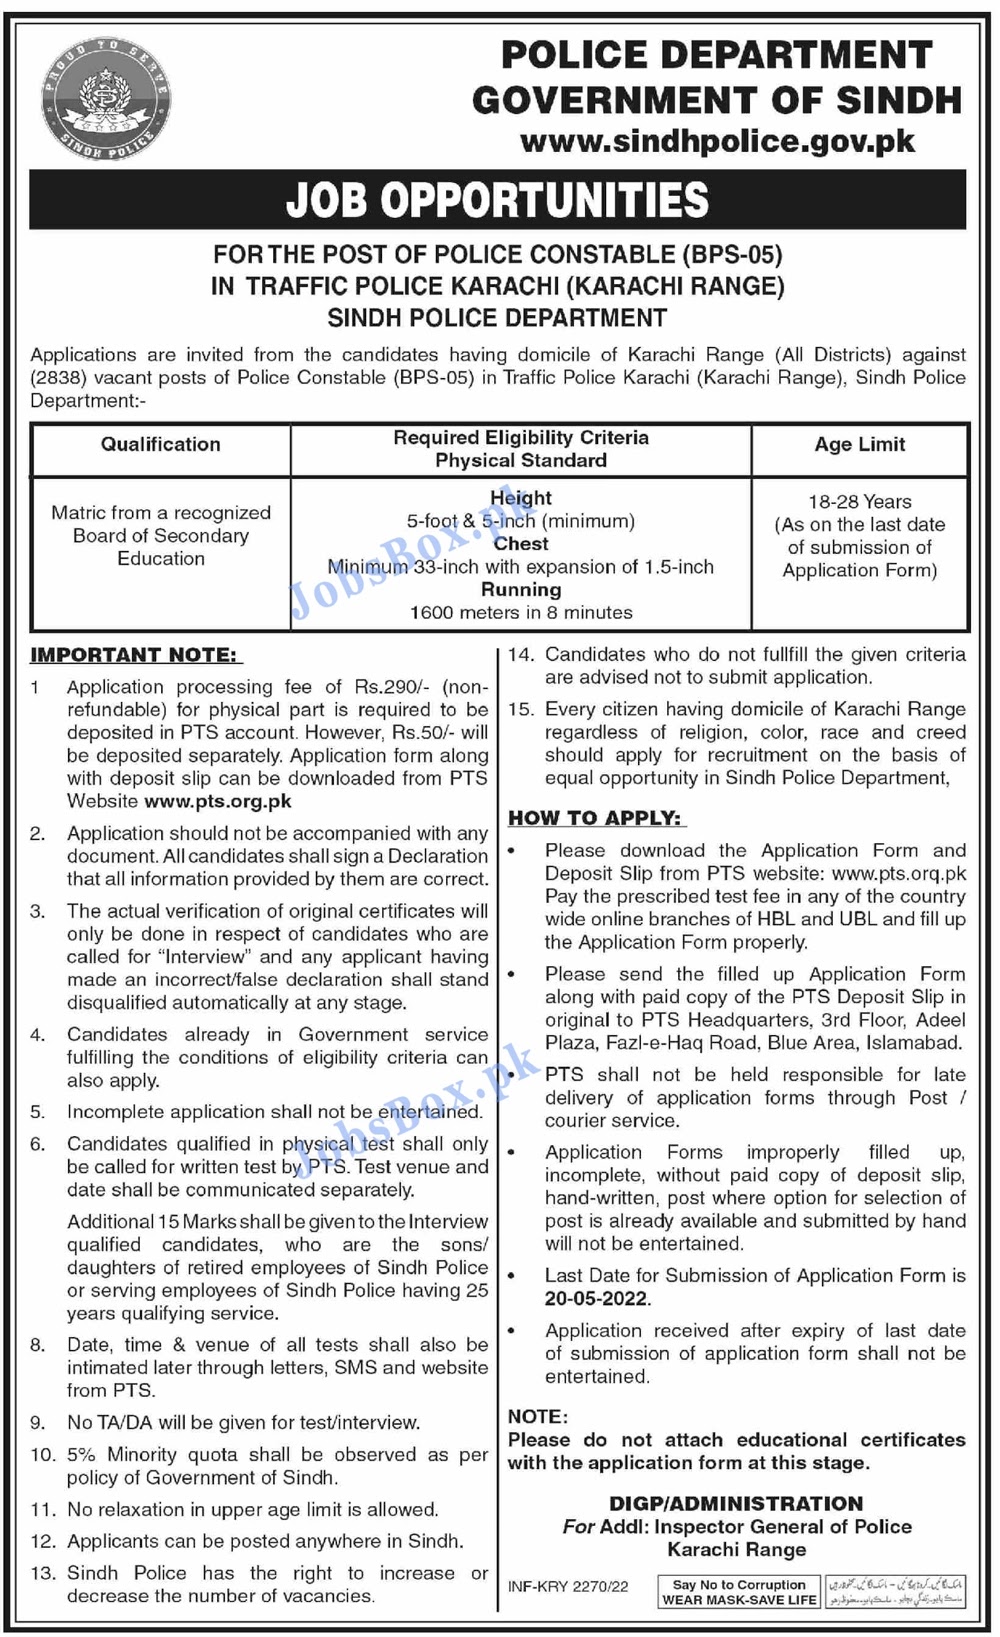 Latest Advertisement of Sindh Police Jobs 2022 in Traffic Police Karachi Range